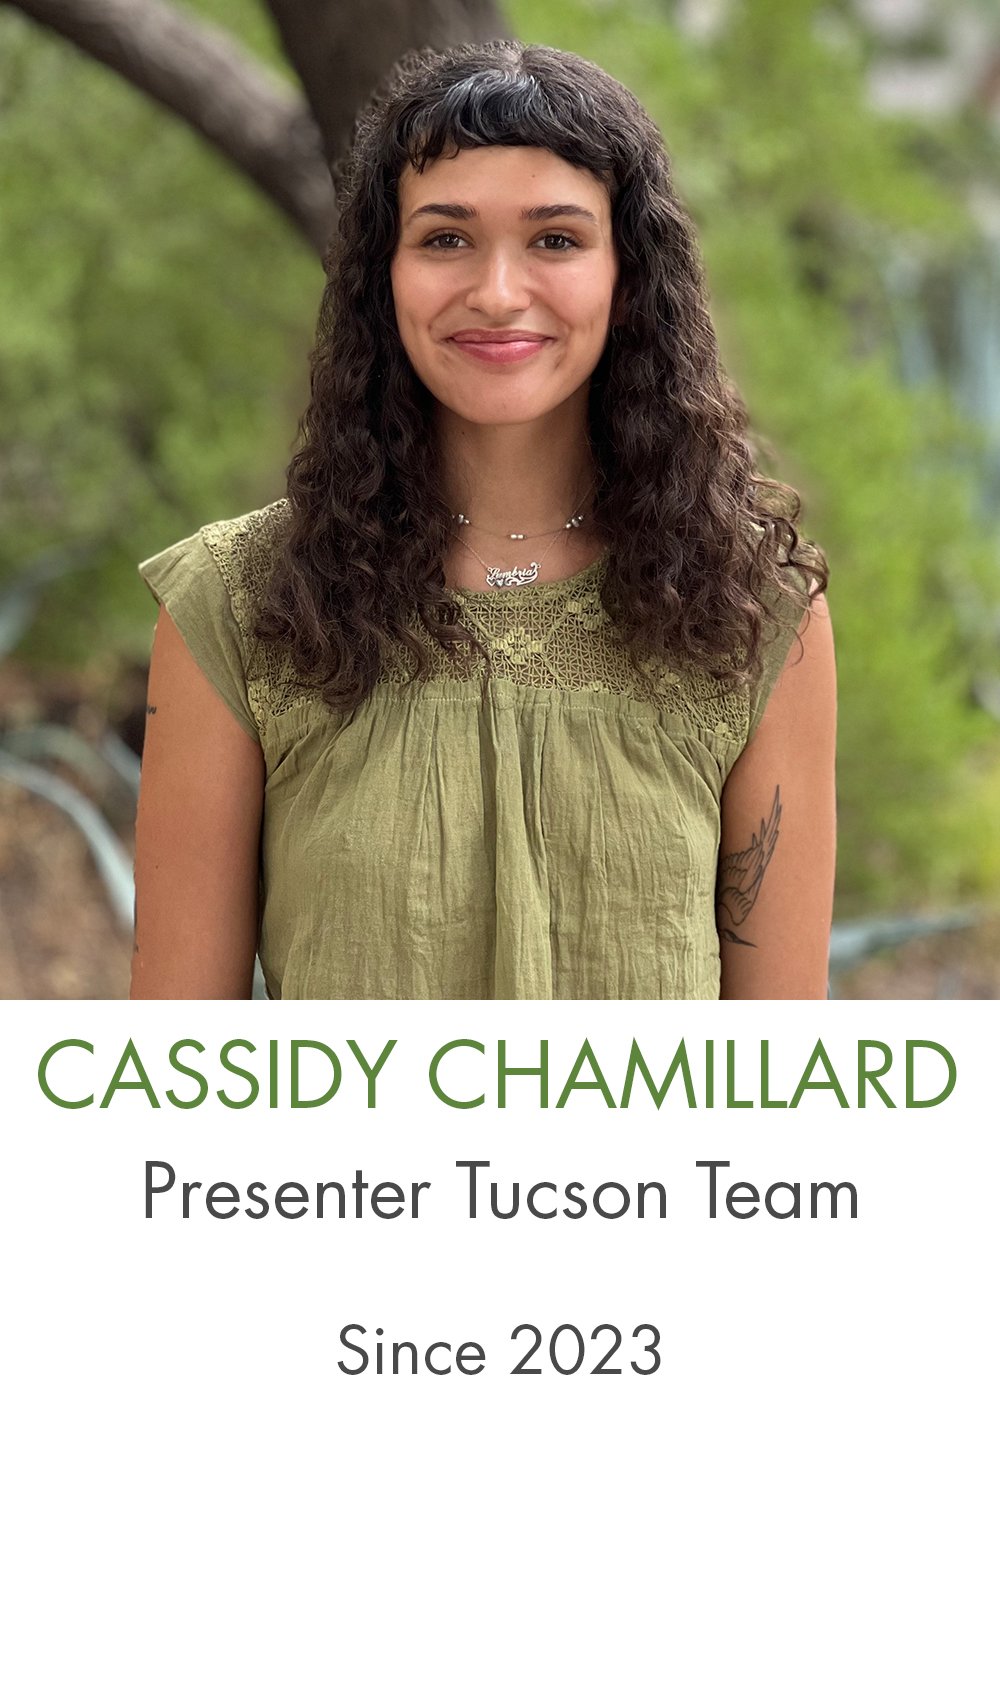 Booklet Talk Trash Tucson — Environmental Education Exchange